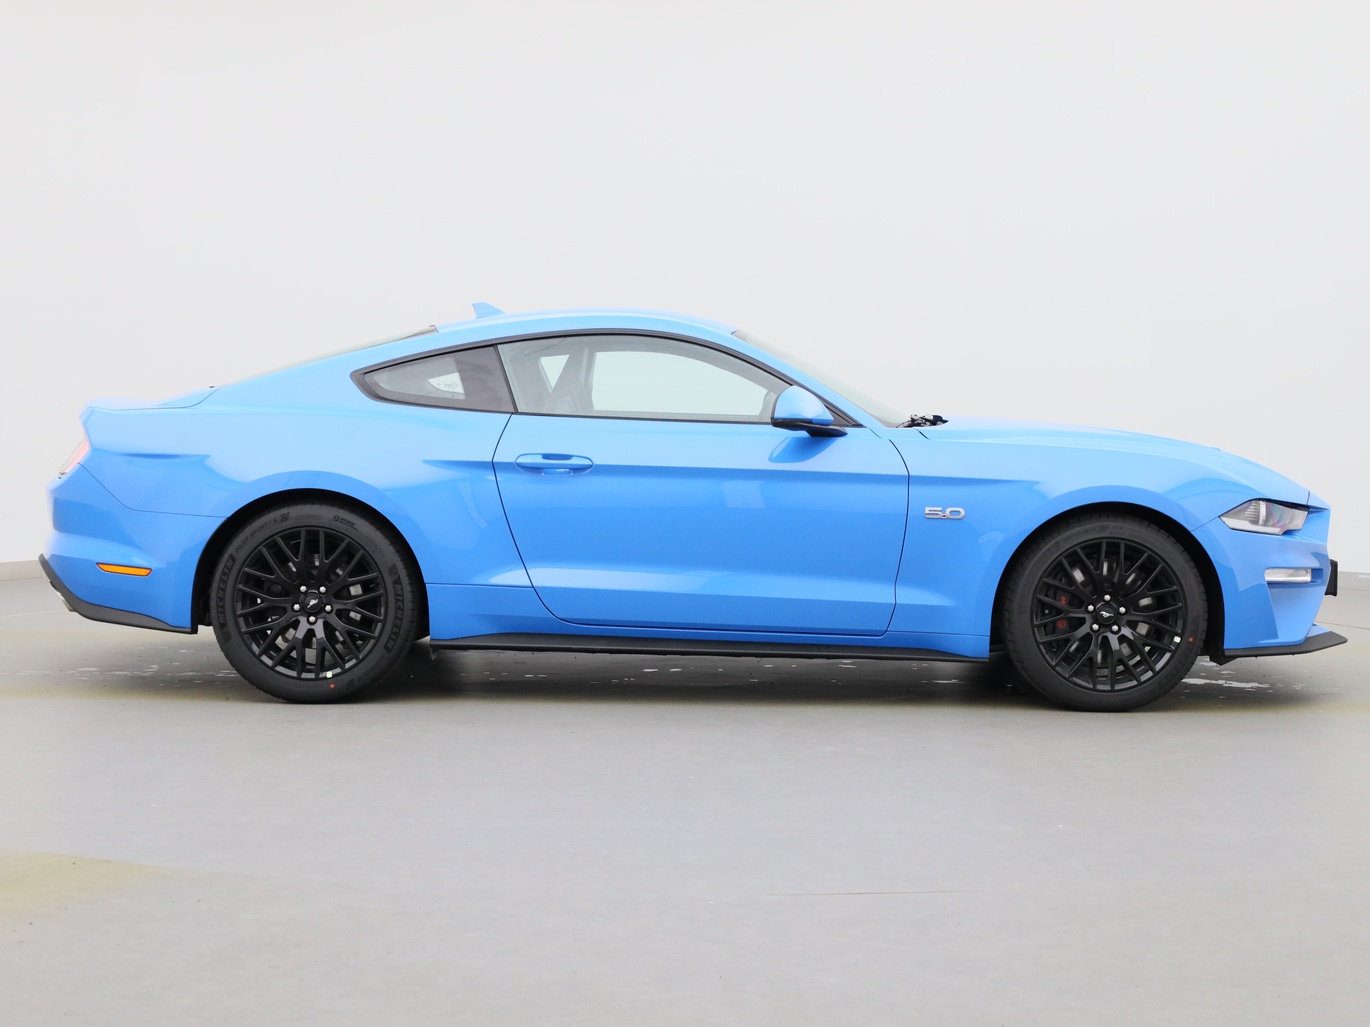  Ford Mustang GT Coupé V8 450PS / Premium 2 / Recaro in Grabber Blue von Rechts